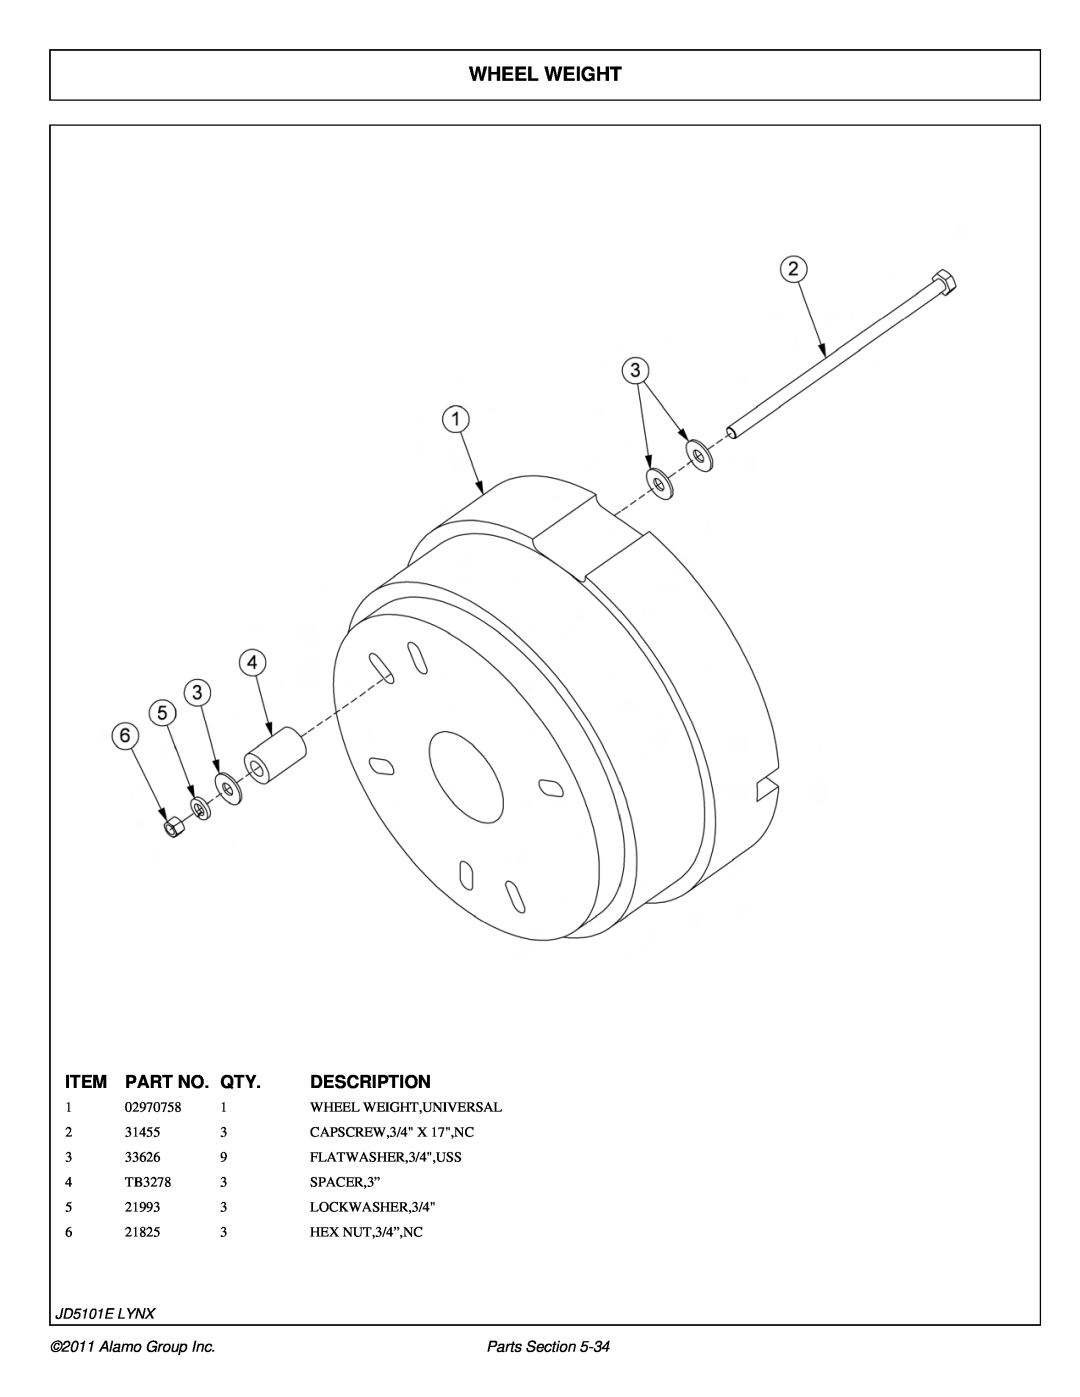 Tiger Products Co., Ltd 5083E manual Wheel Weight, Item, Part No, Description, JD5101E LYNX, Alamo Group Inc, Parts Section 